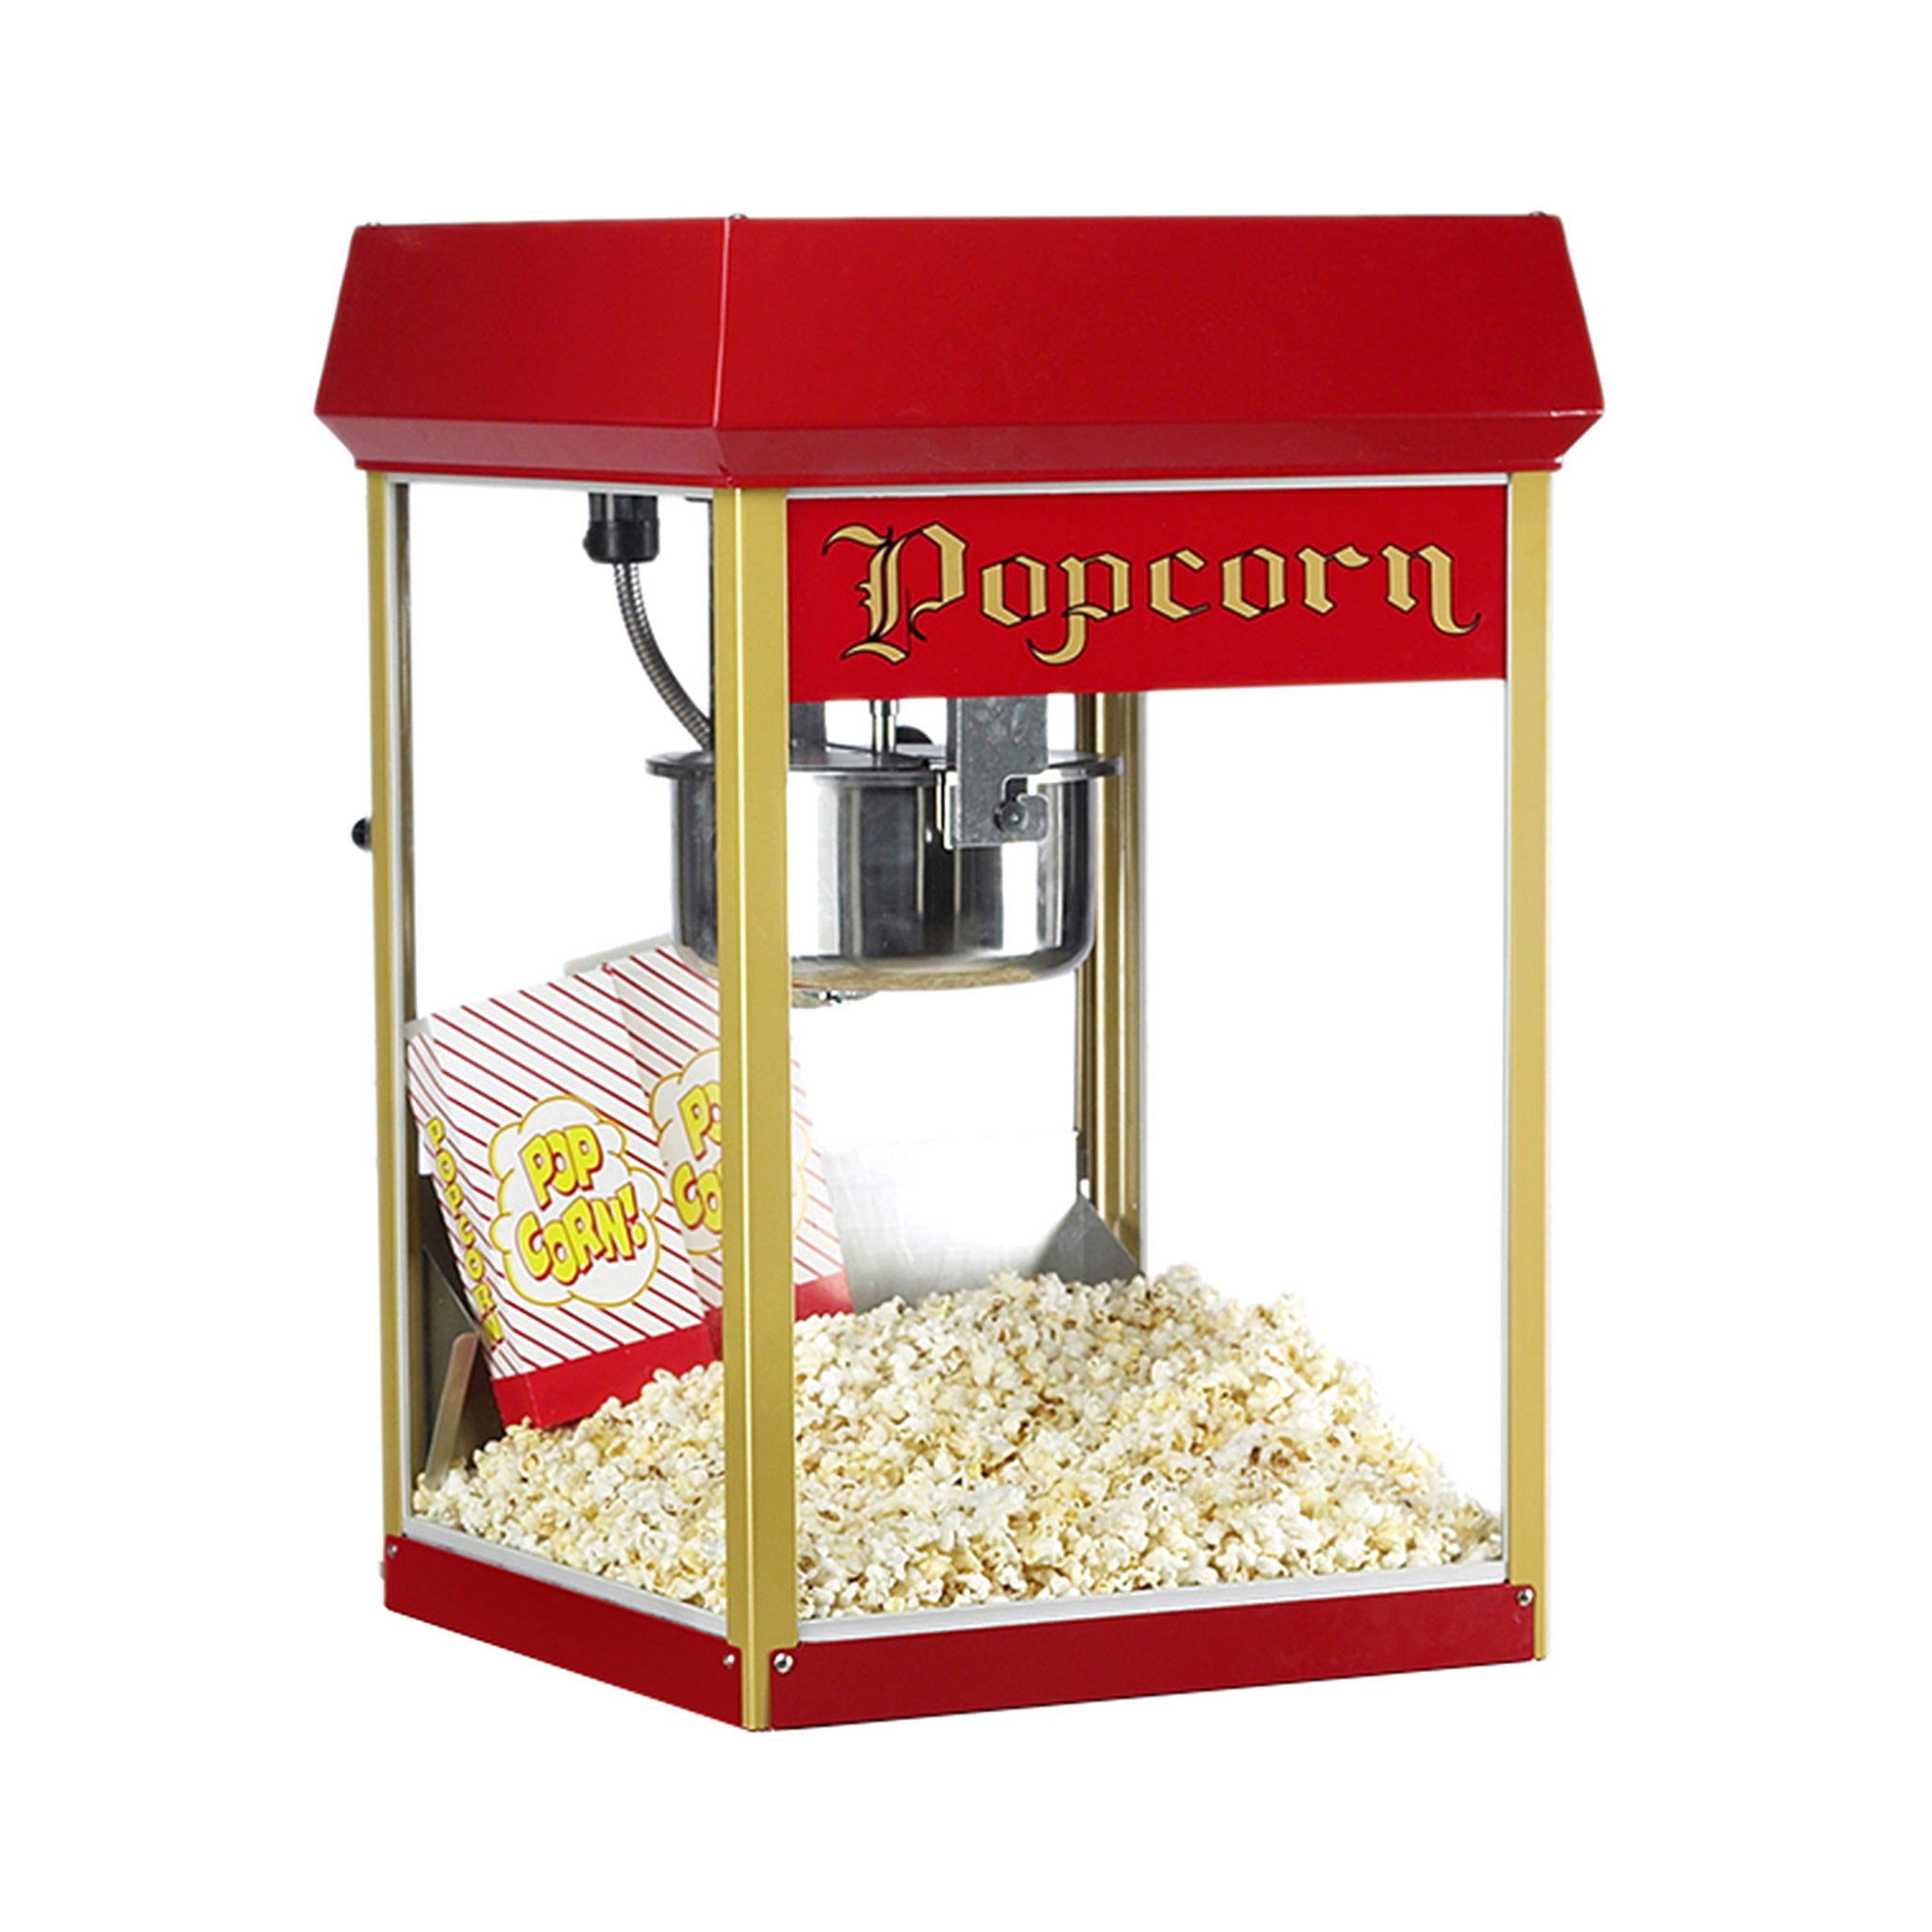 8oz Red Fun Pop Popcorn Machine Gold Medal